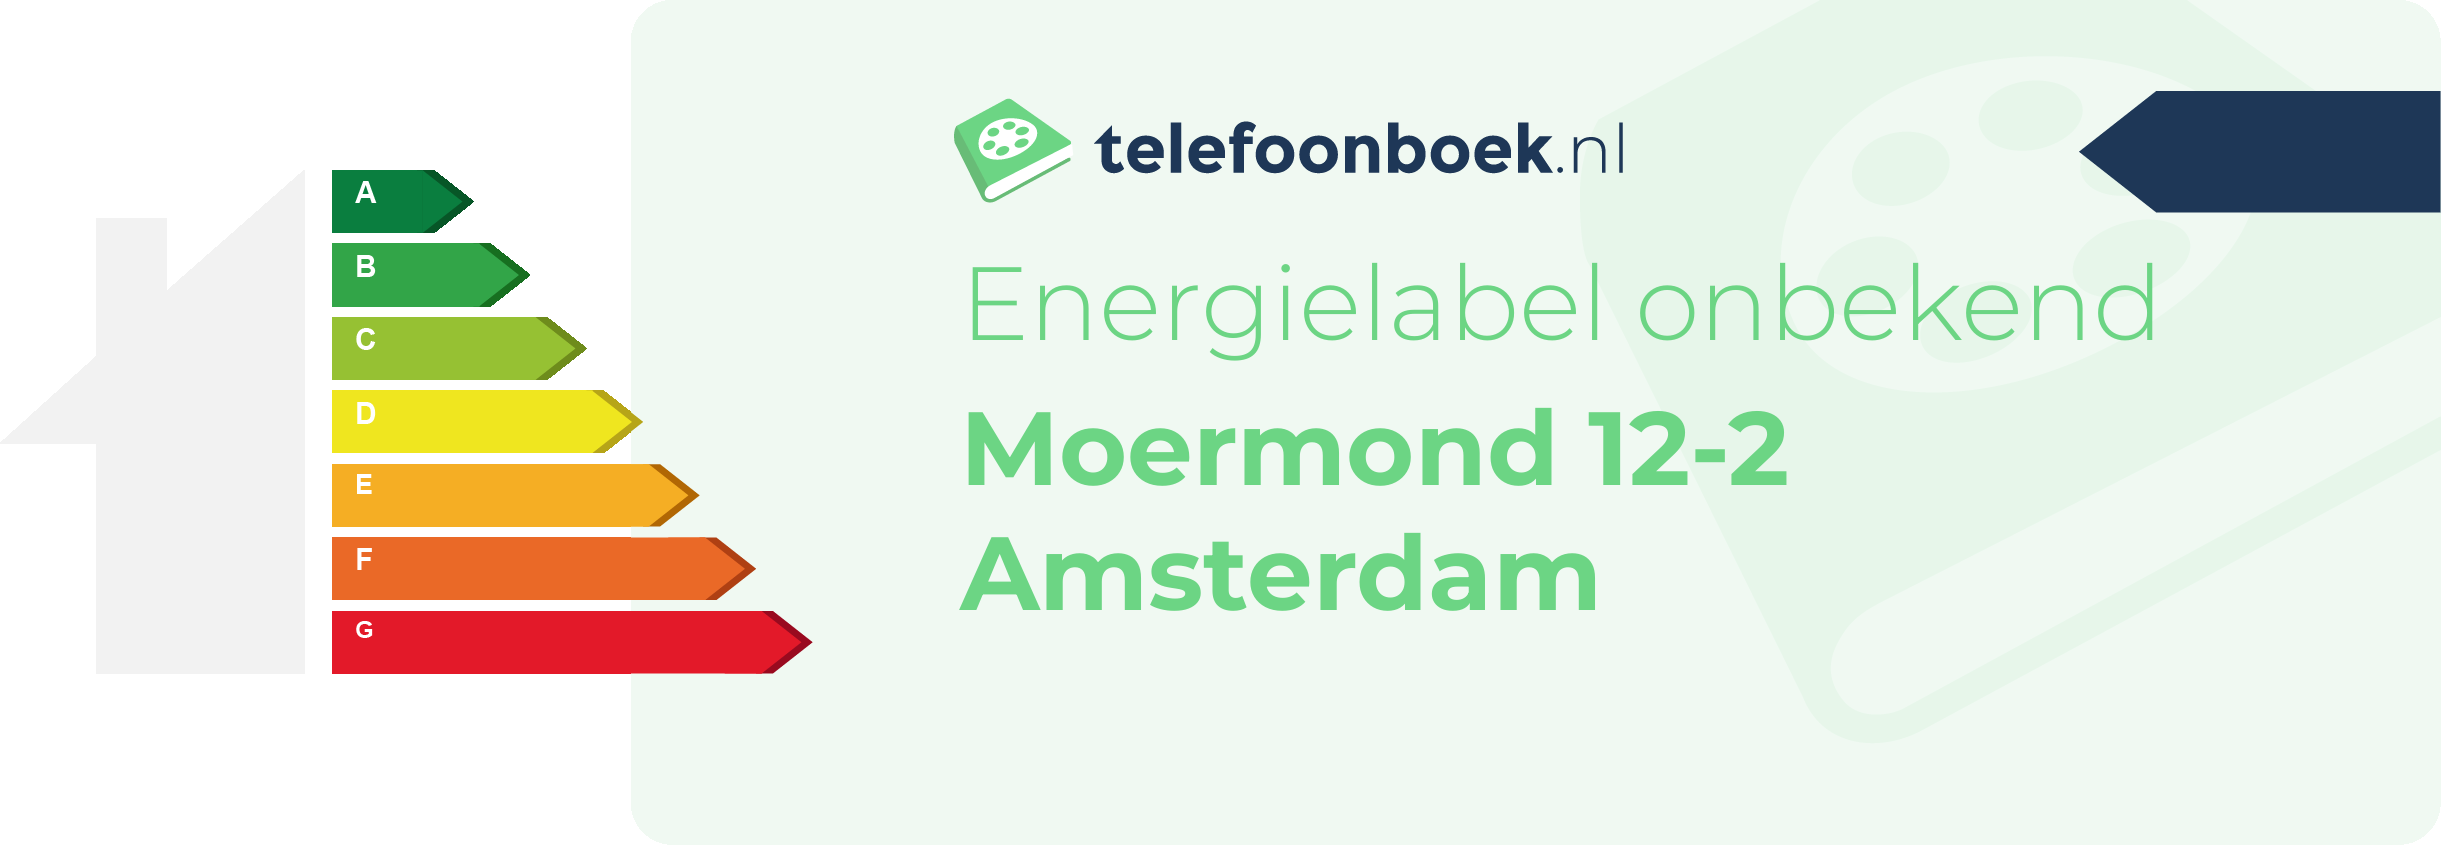 Energielabel Moermond 12-2 Amsterdam